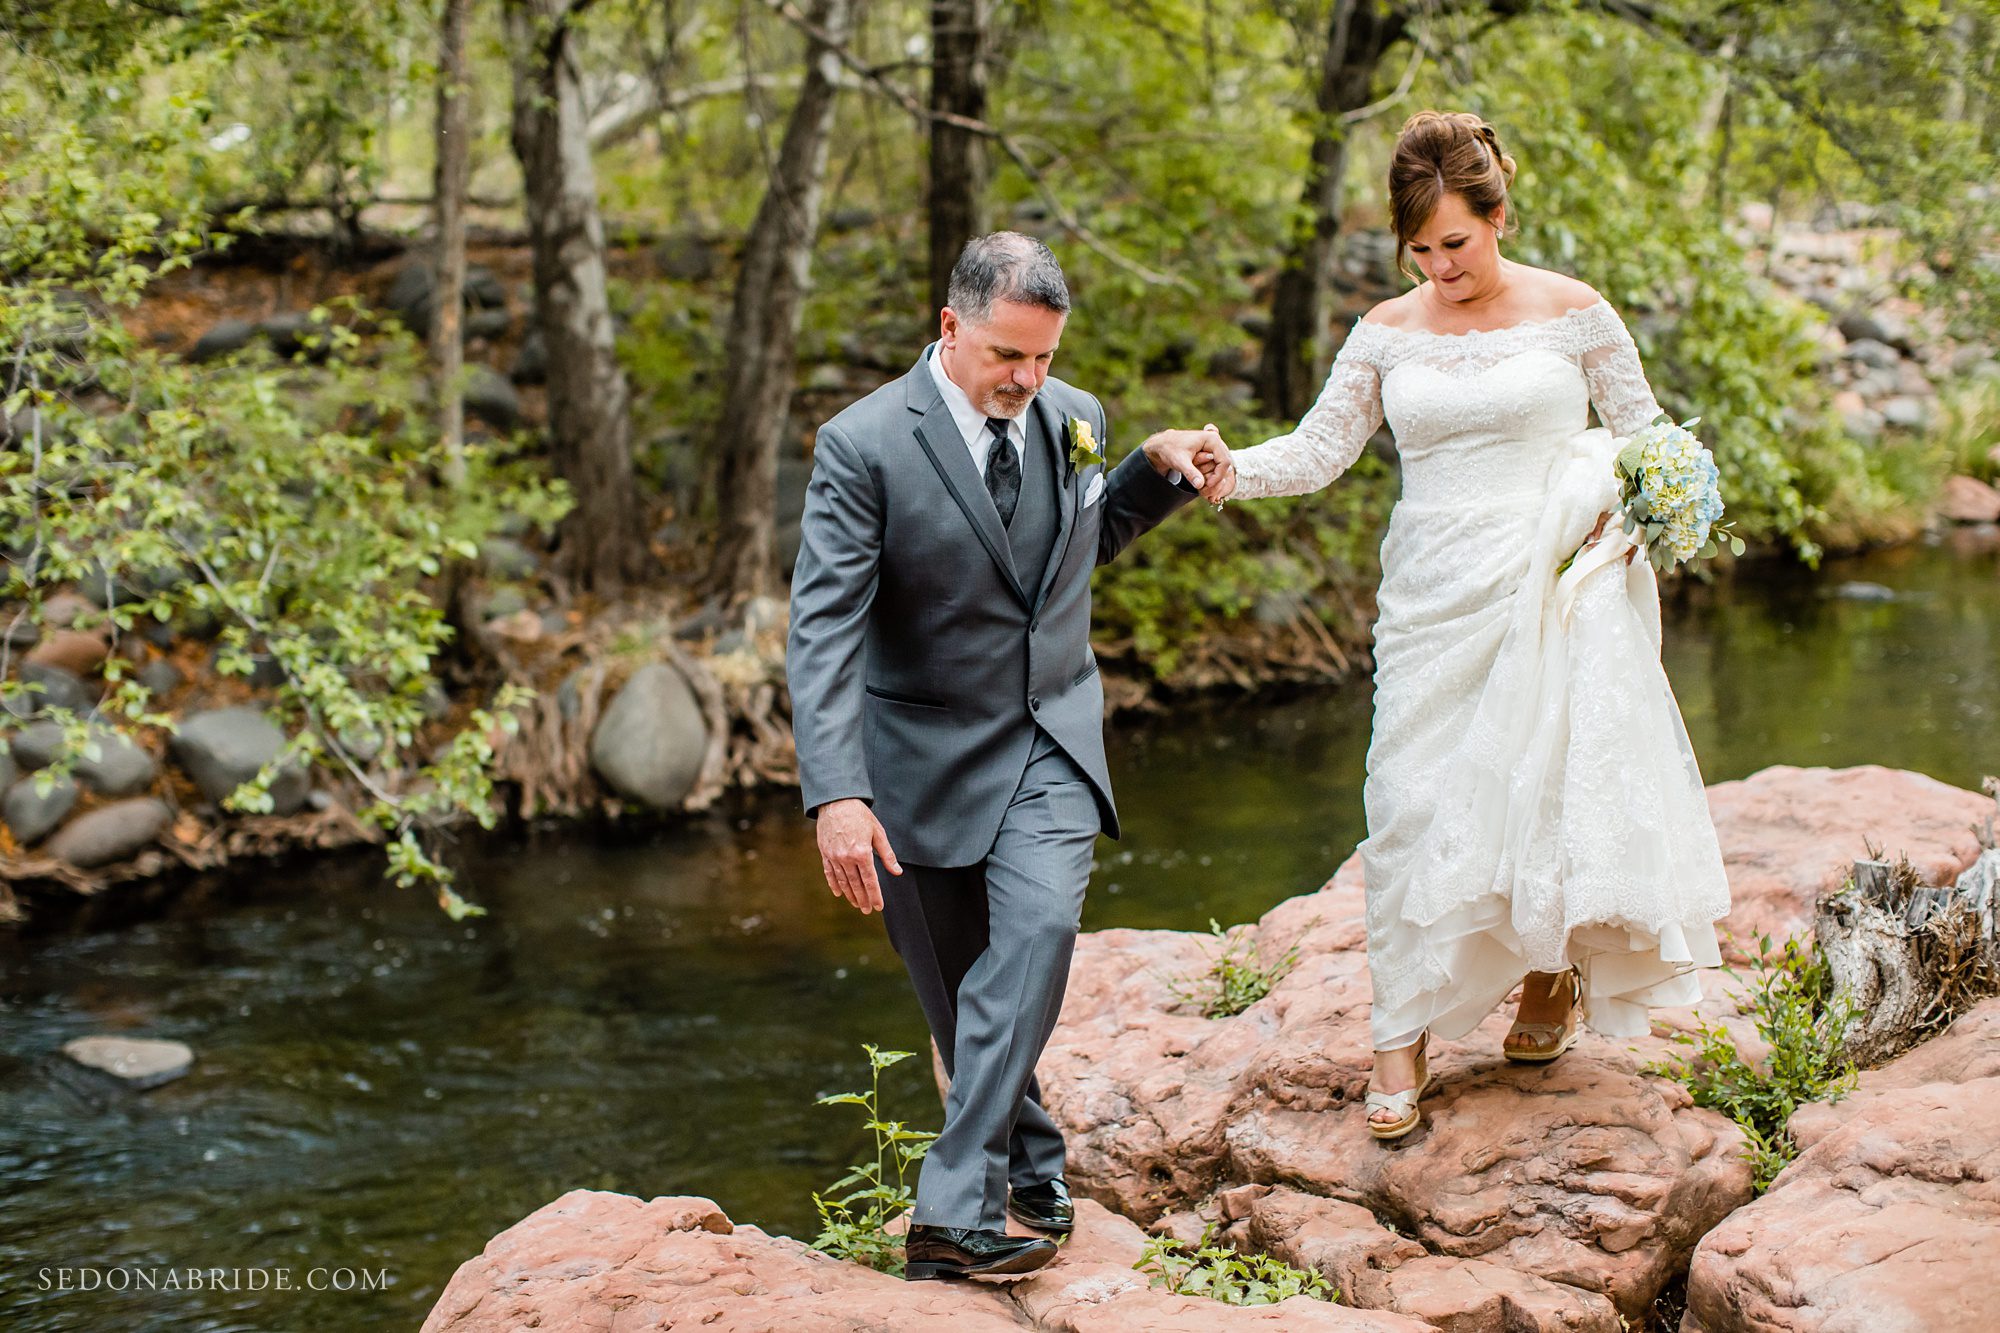 A groom helps his bride walk across the red rocks